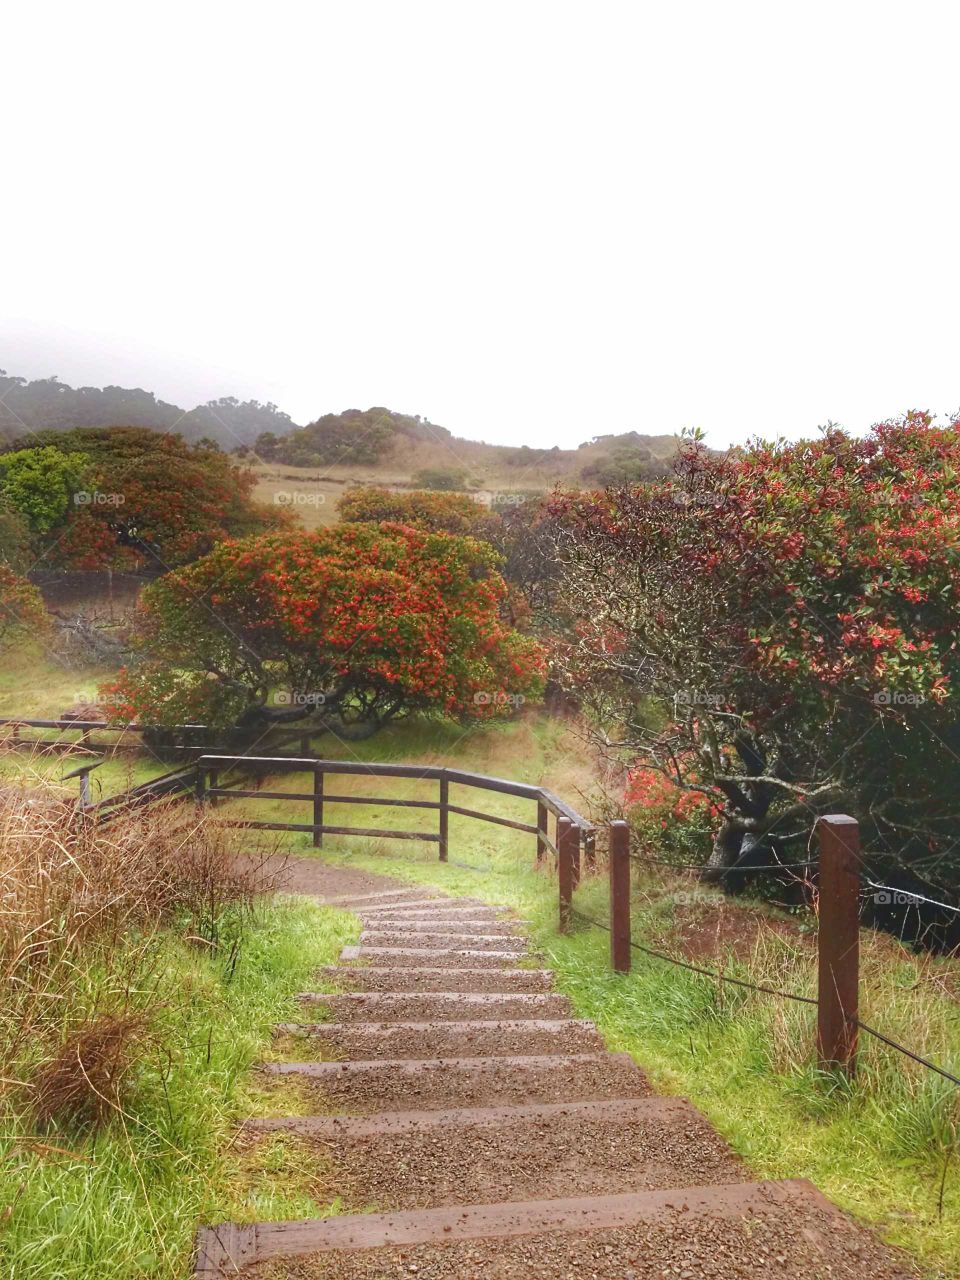 Golden Gate Recreational Area